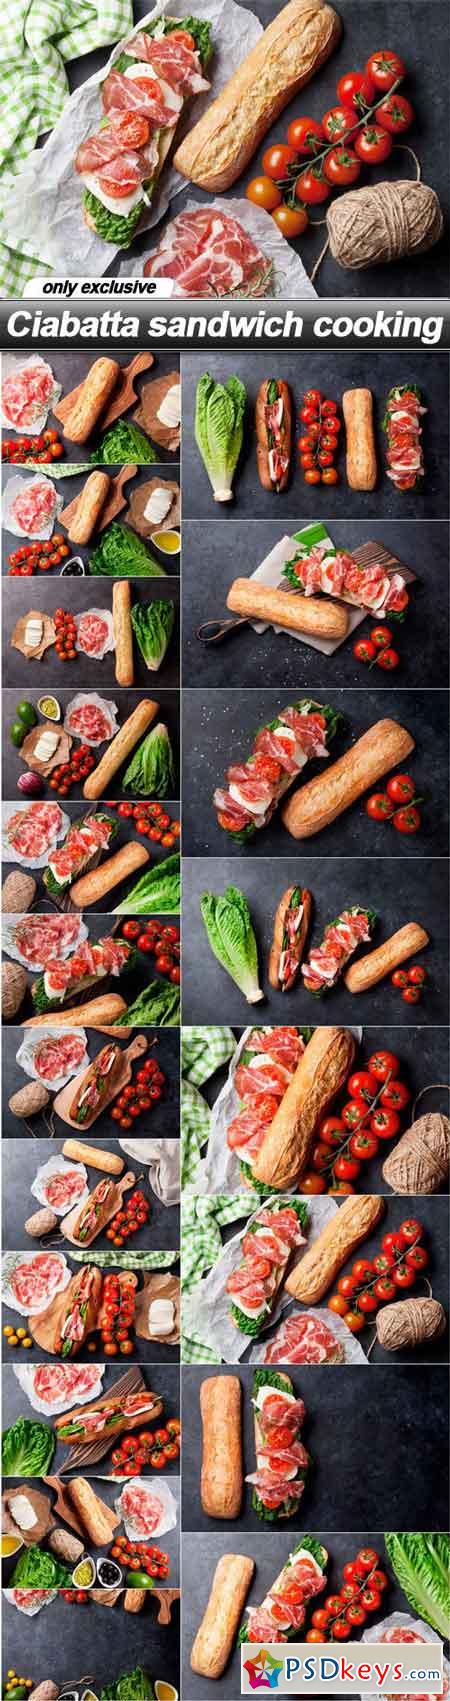 Ciabatta sandwich cooking - 20 UHQ JPEG